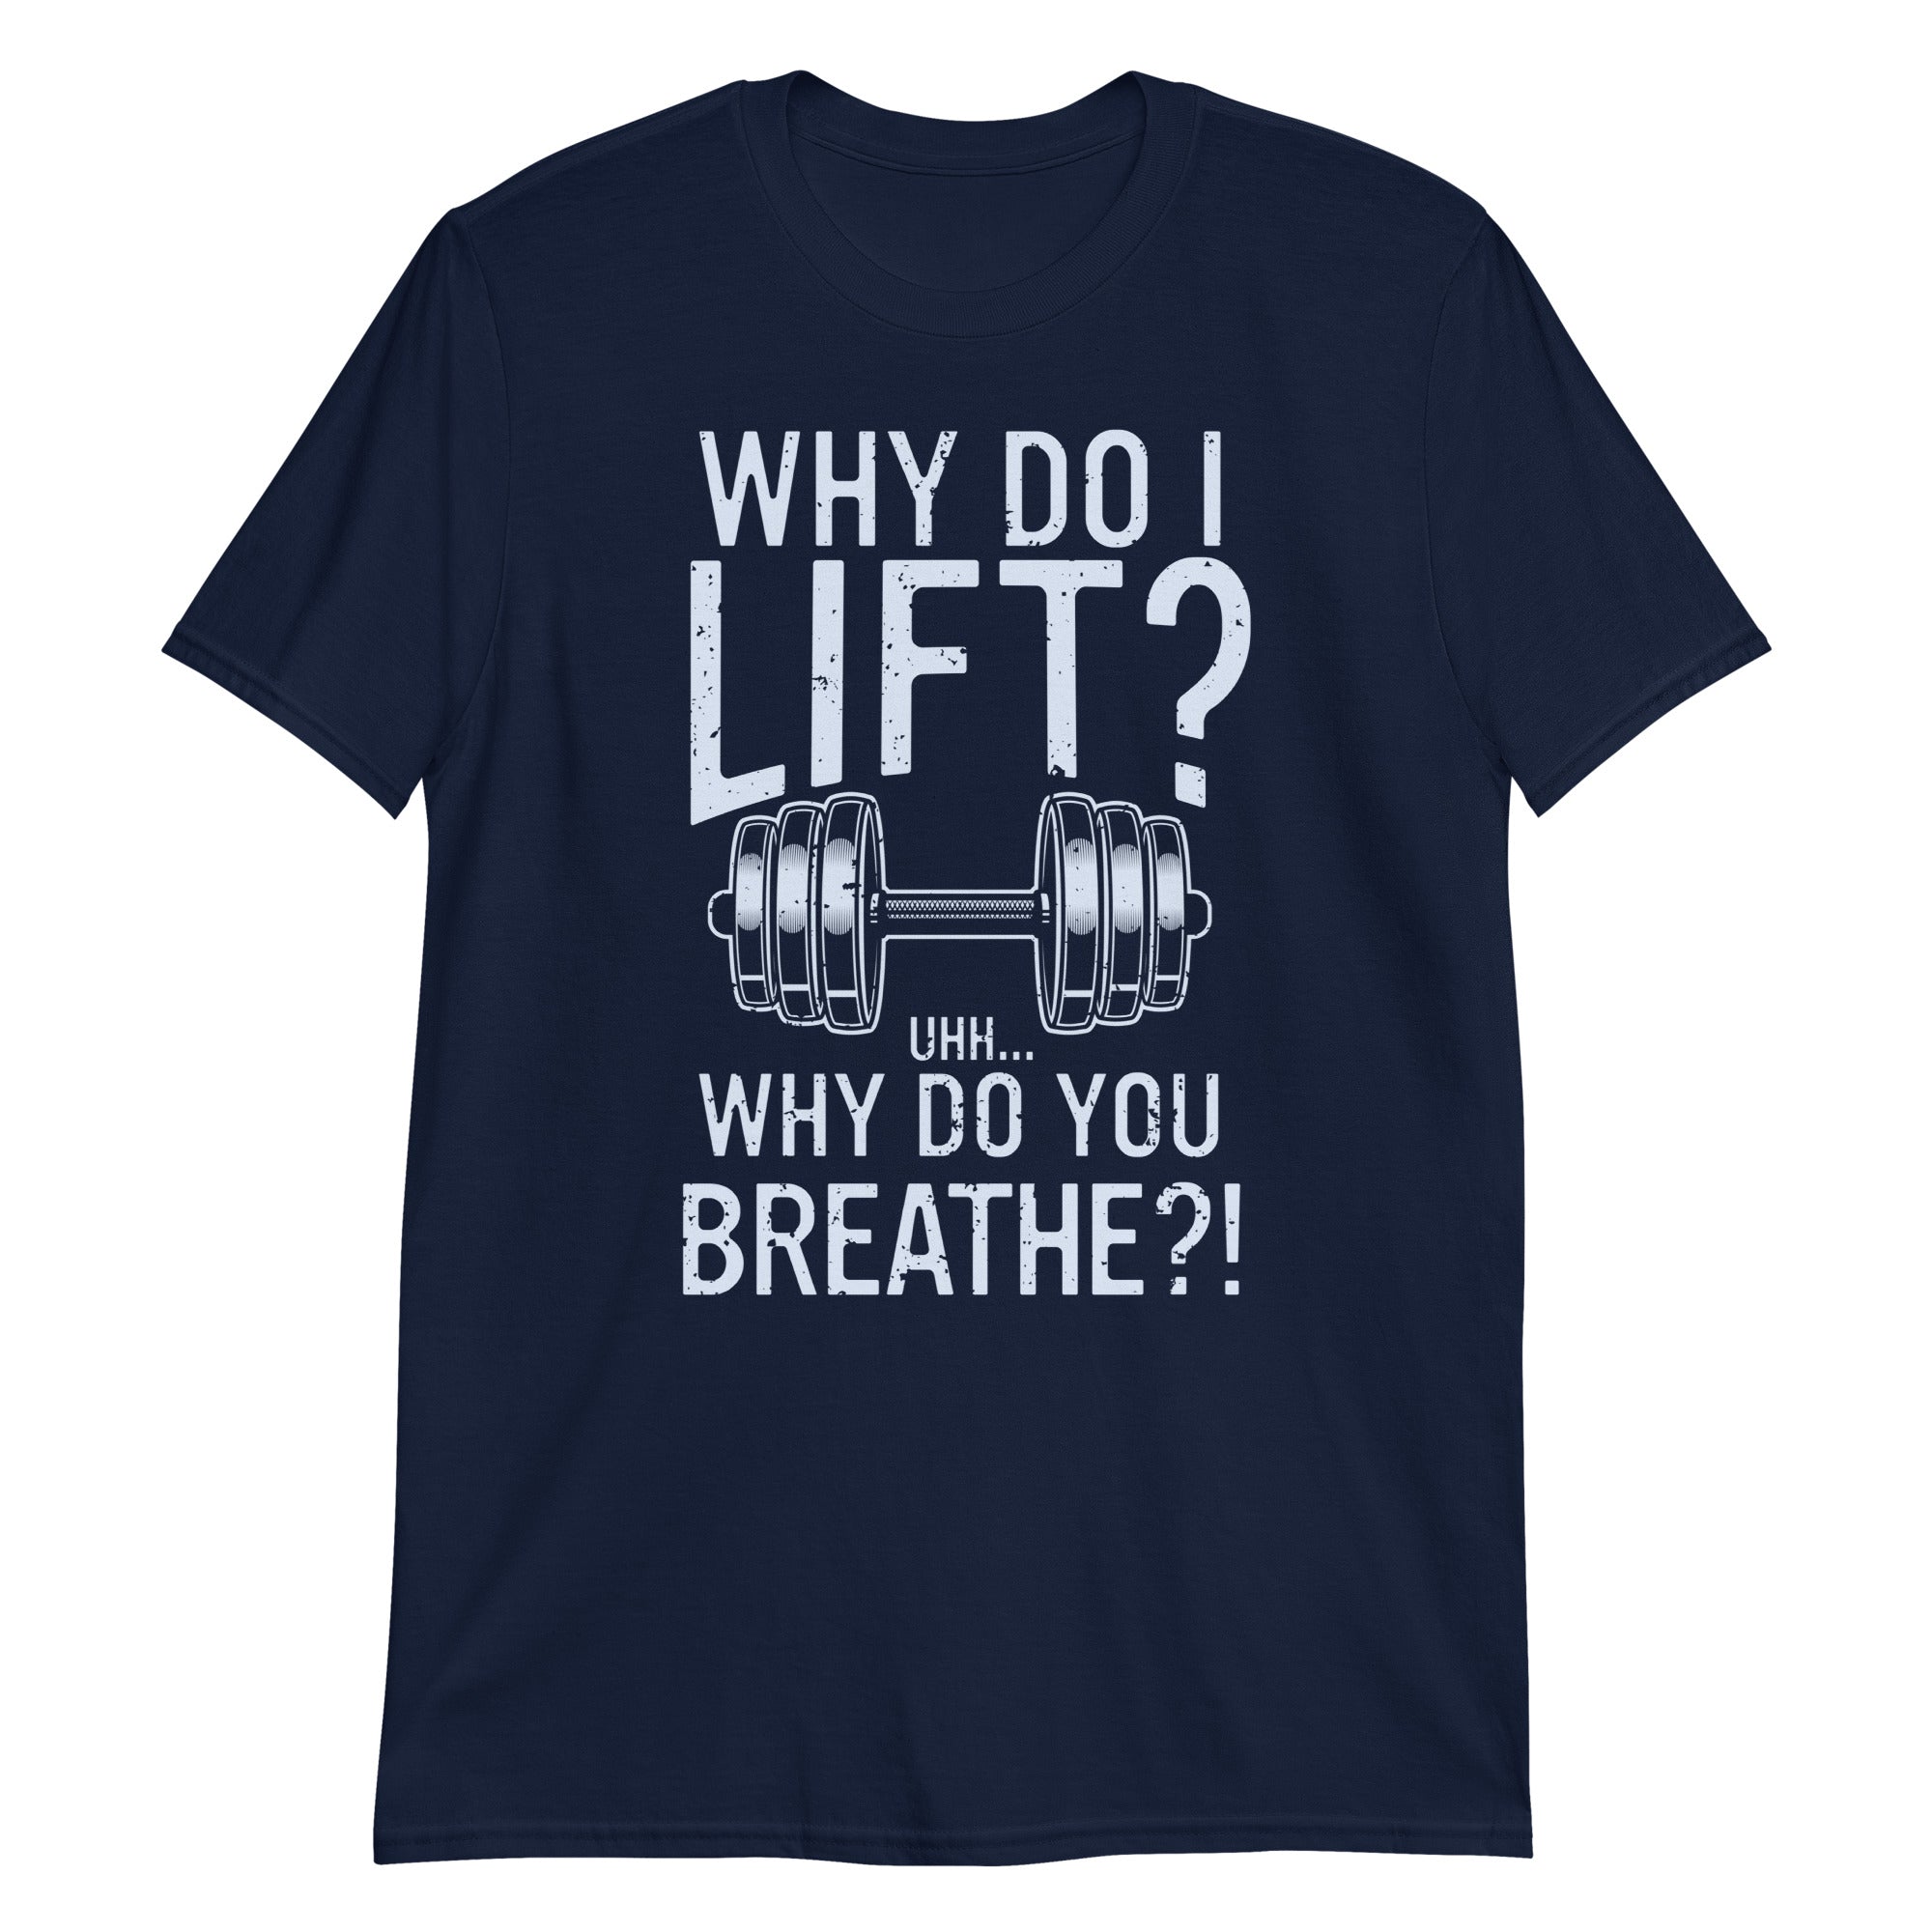 Why do I lift?